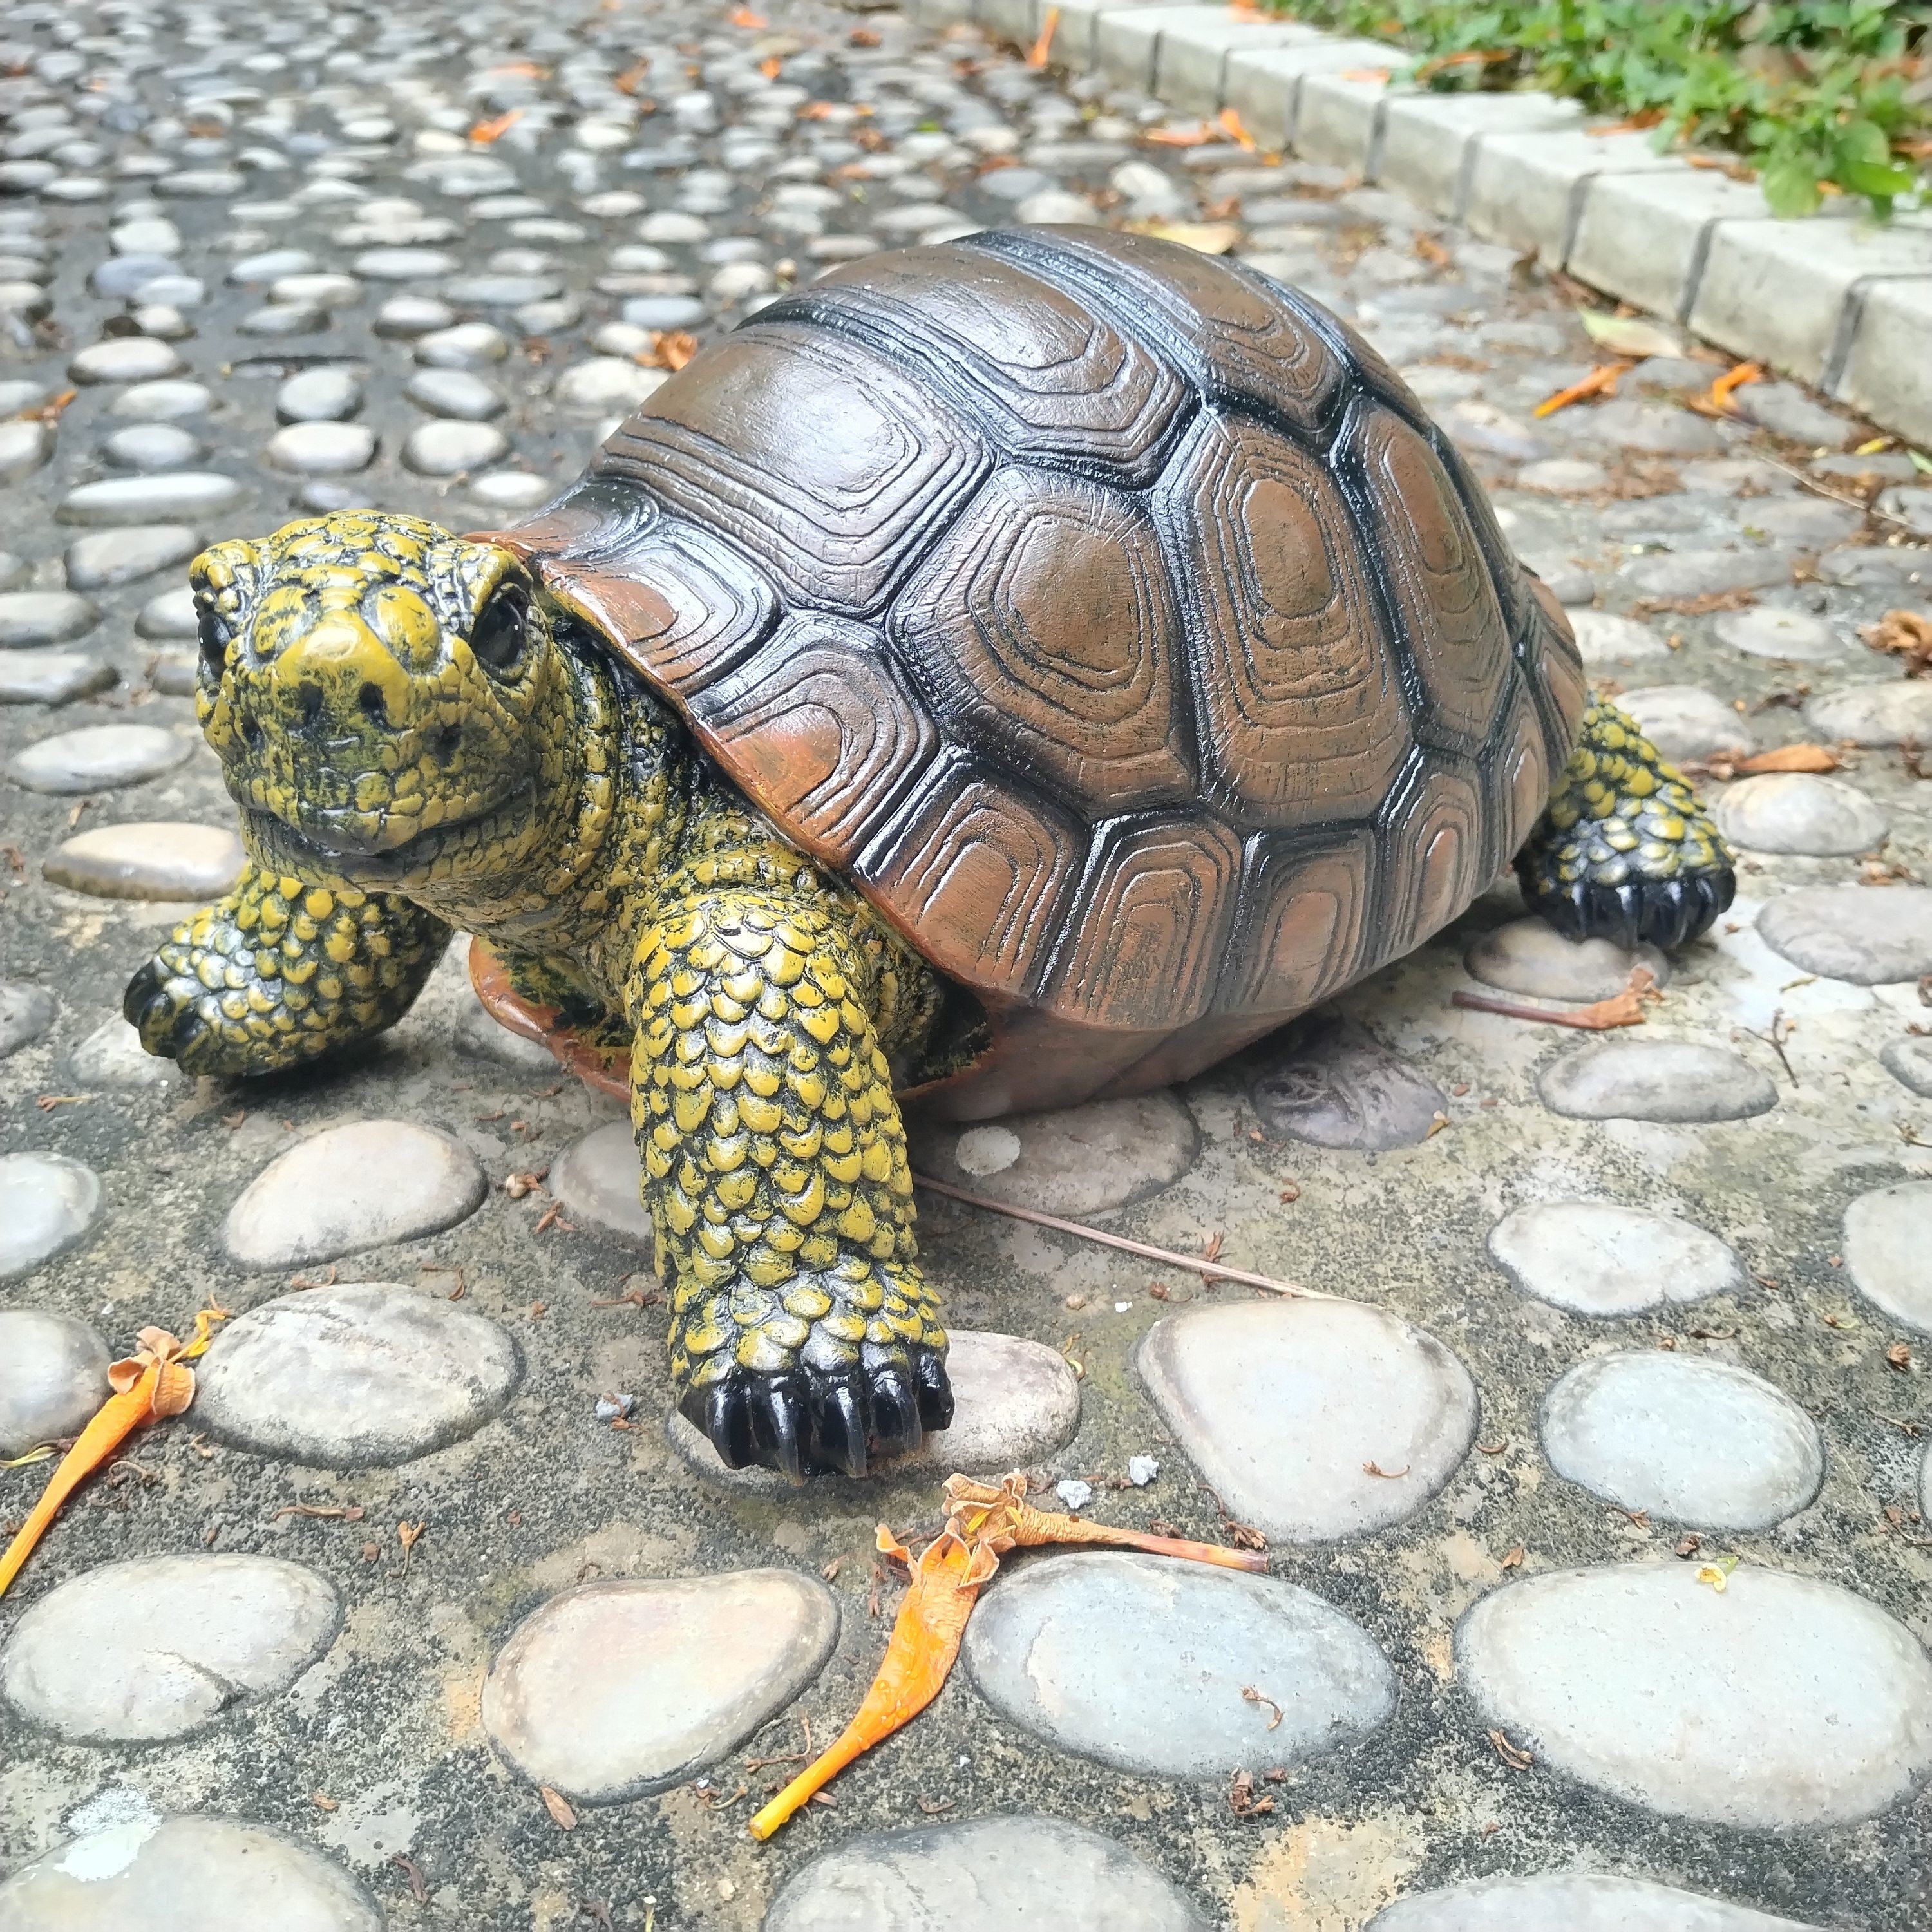 

1pc Lifelike Resin Turtle Statue, Classic Garden & Home Decor, Realistic Tortoise Figurine For Yard Lawn Decoration